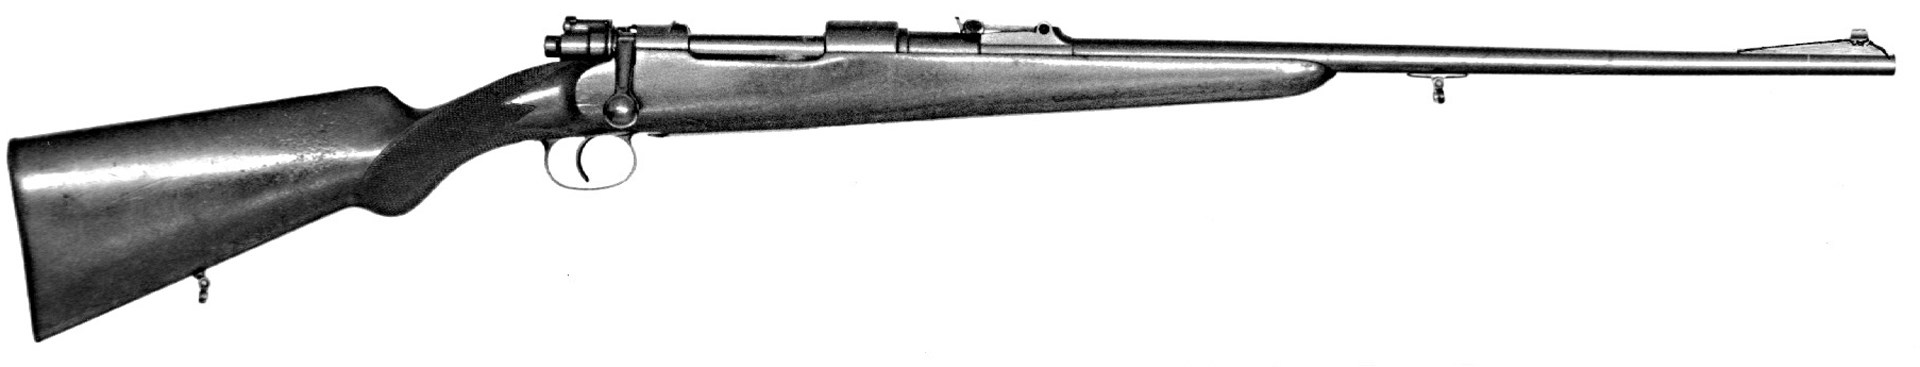 Early sporterized mauser rifle gun right-side view black white vintage